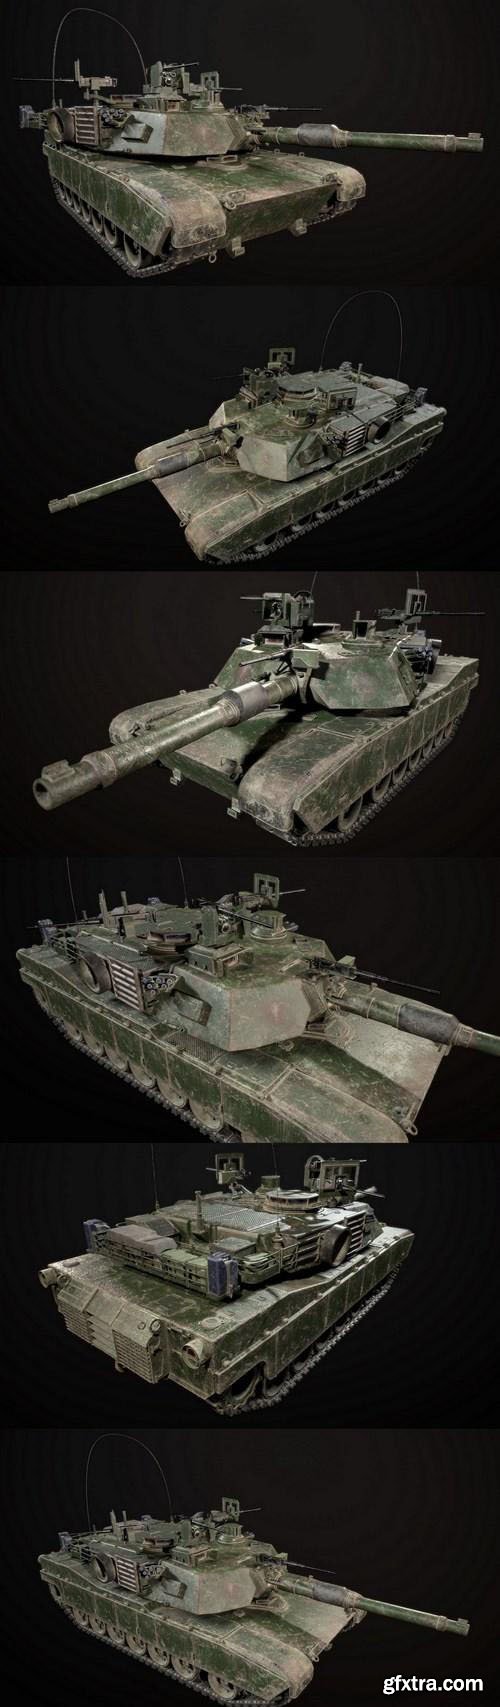 M1A2 Abrams Main Battle Tank 3d Model